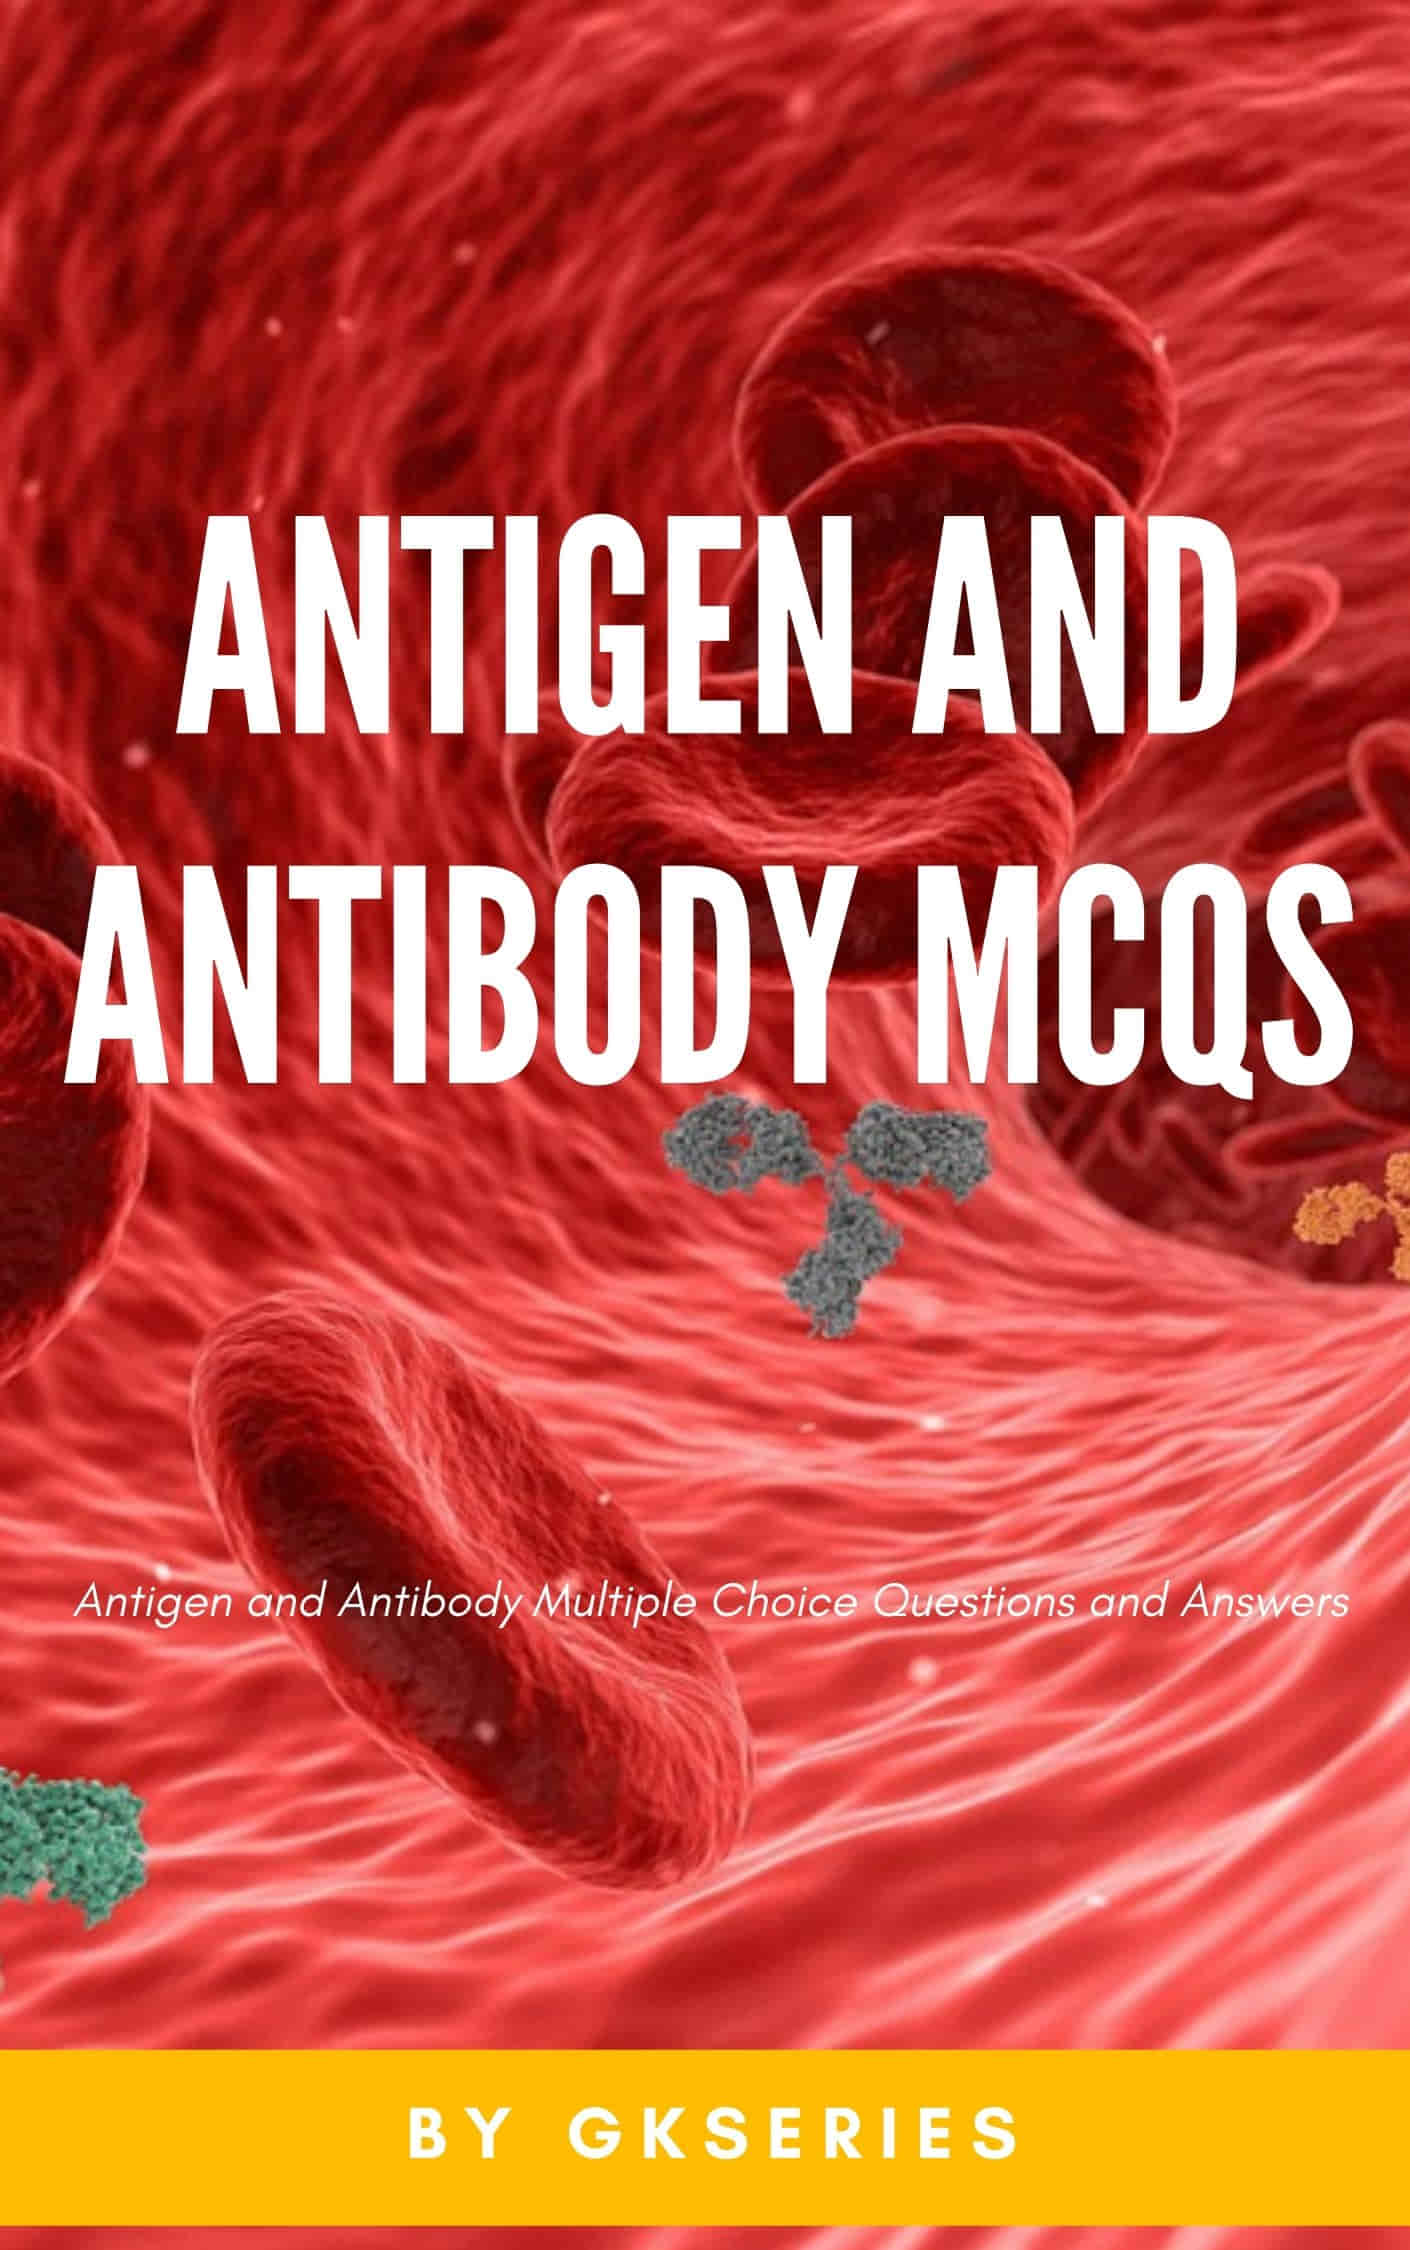 Antigen and Antibody